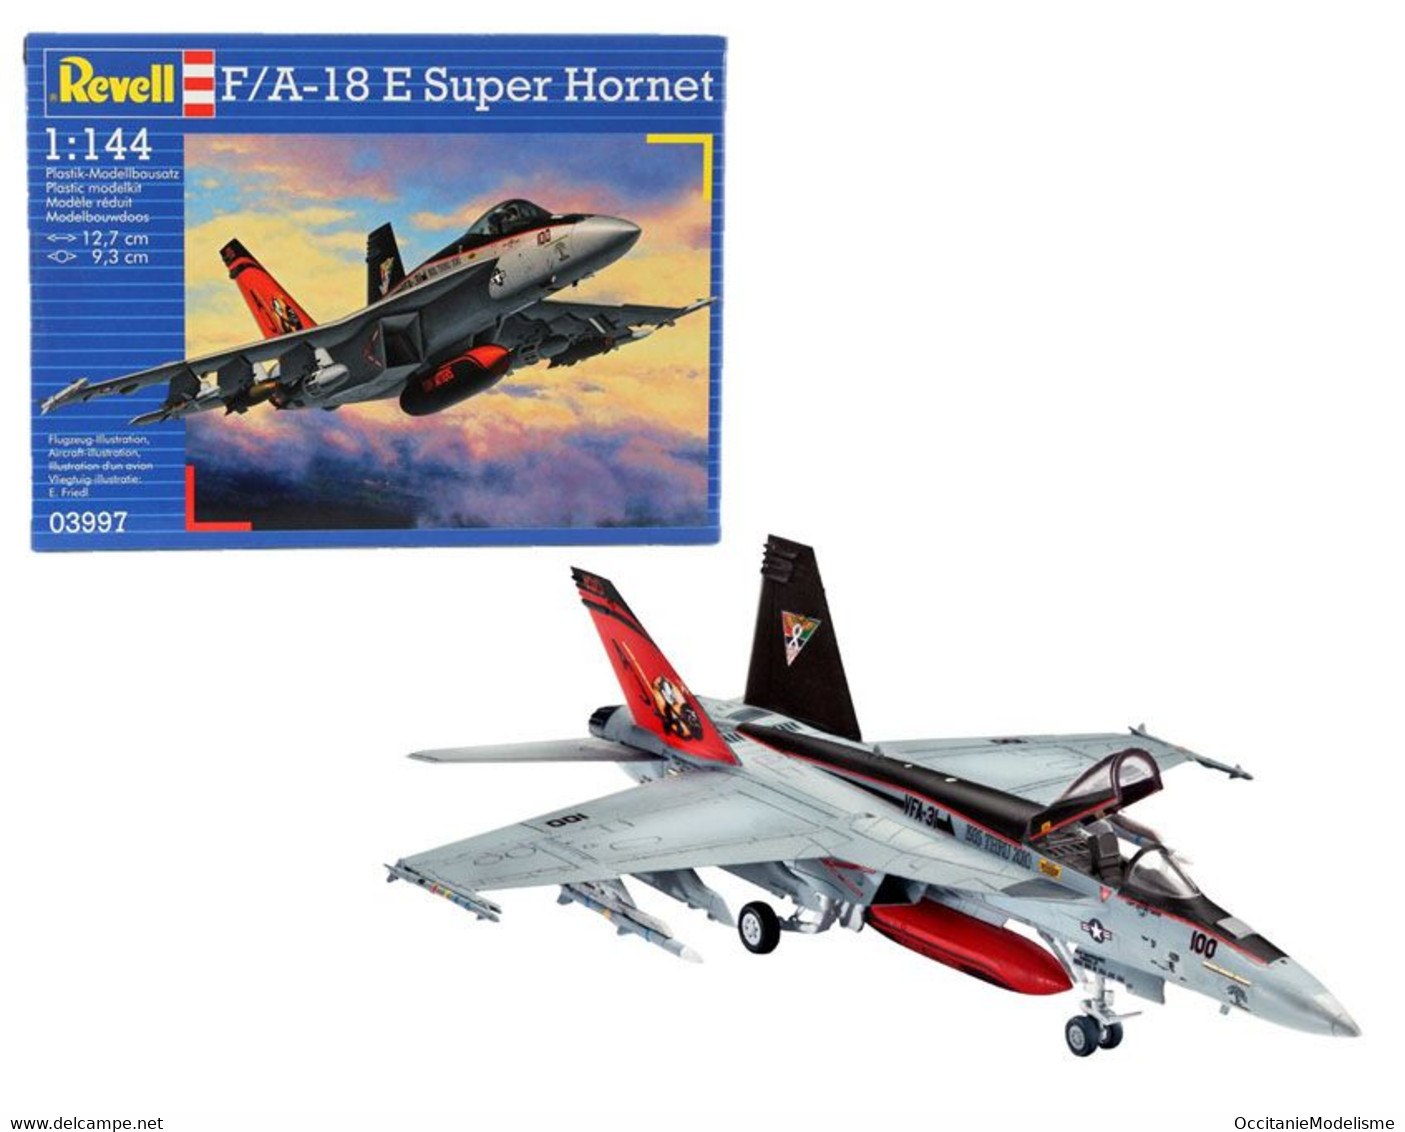 Revell - F/A-18 E Super Hornet US Navy Maquette Avion Kit Plastique Réf. 03997 Neuf NBO 1/144 - Avions